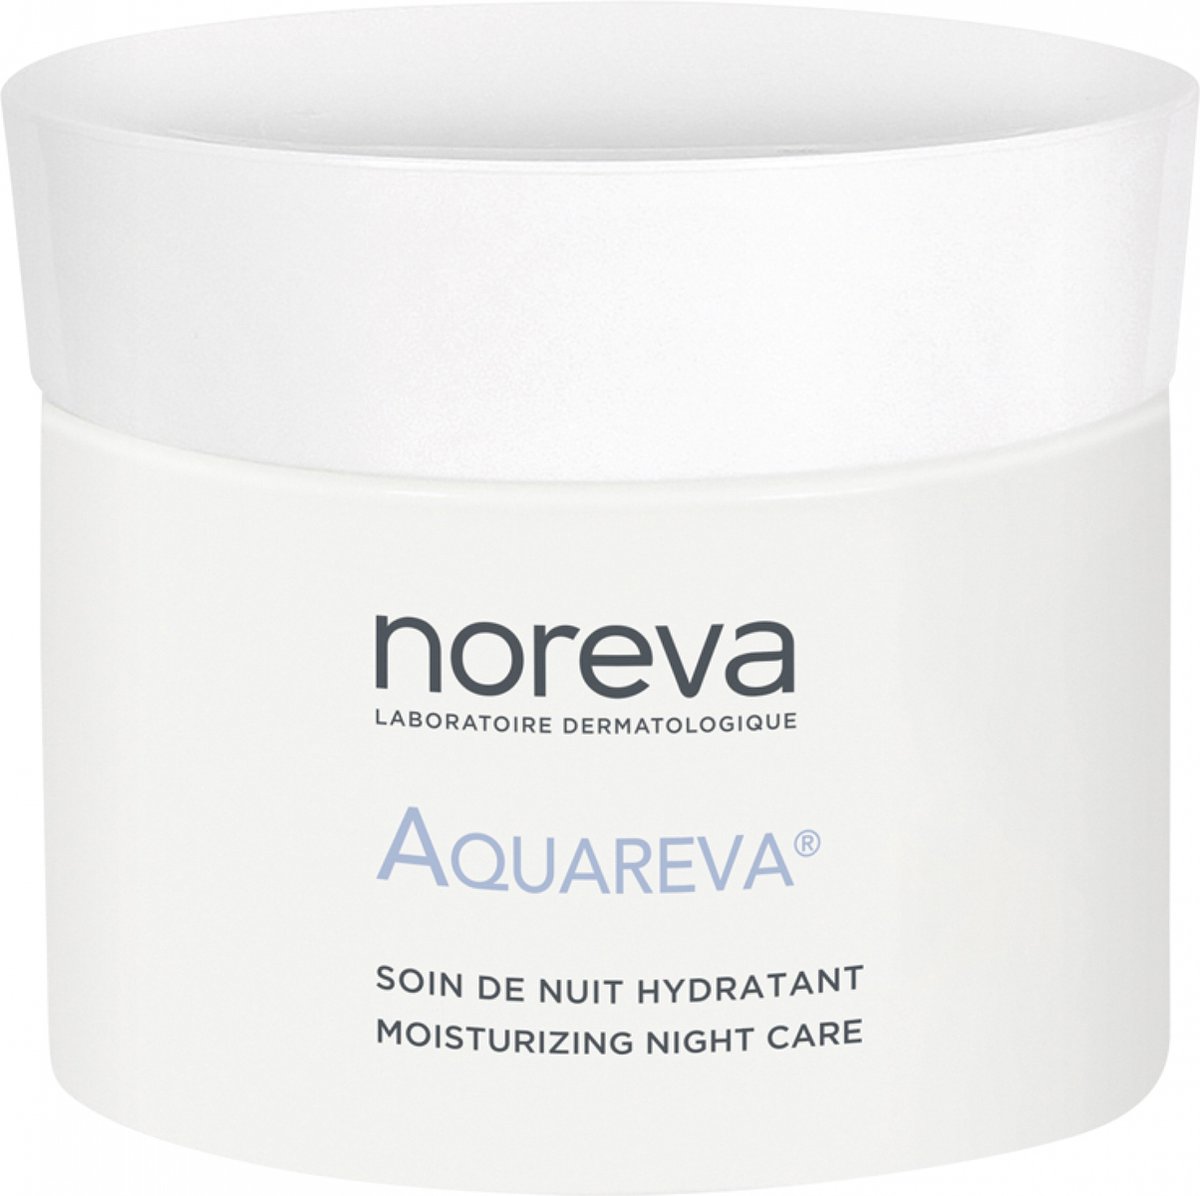 Noreva Nachtcrème Aquareva Moisturizing Night Care